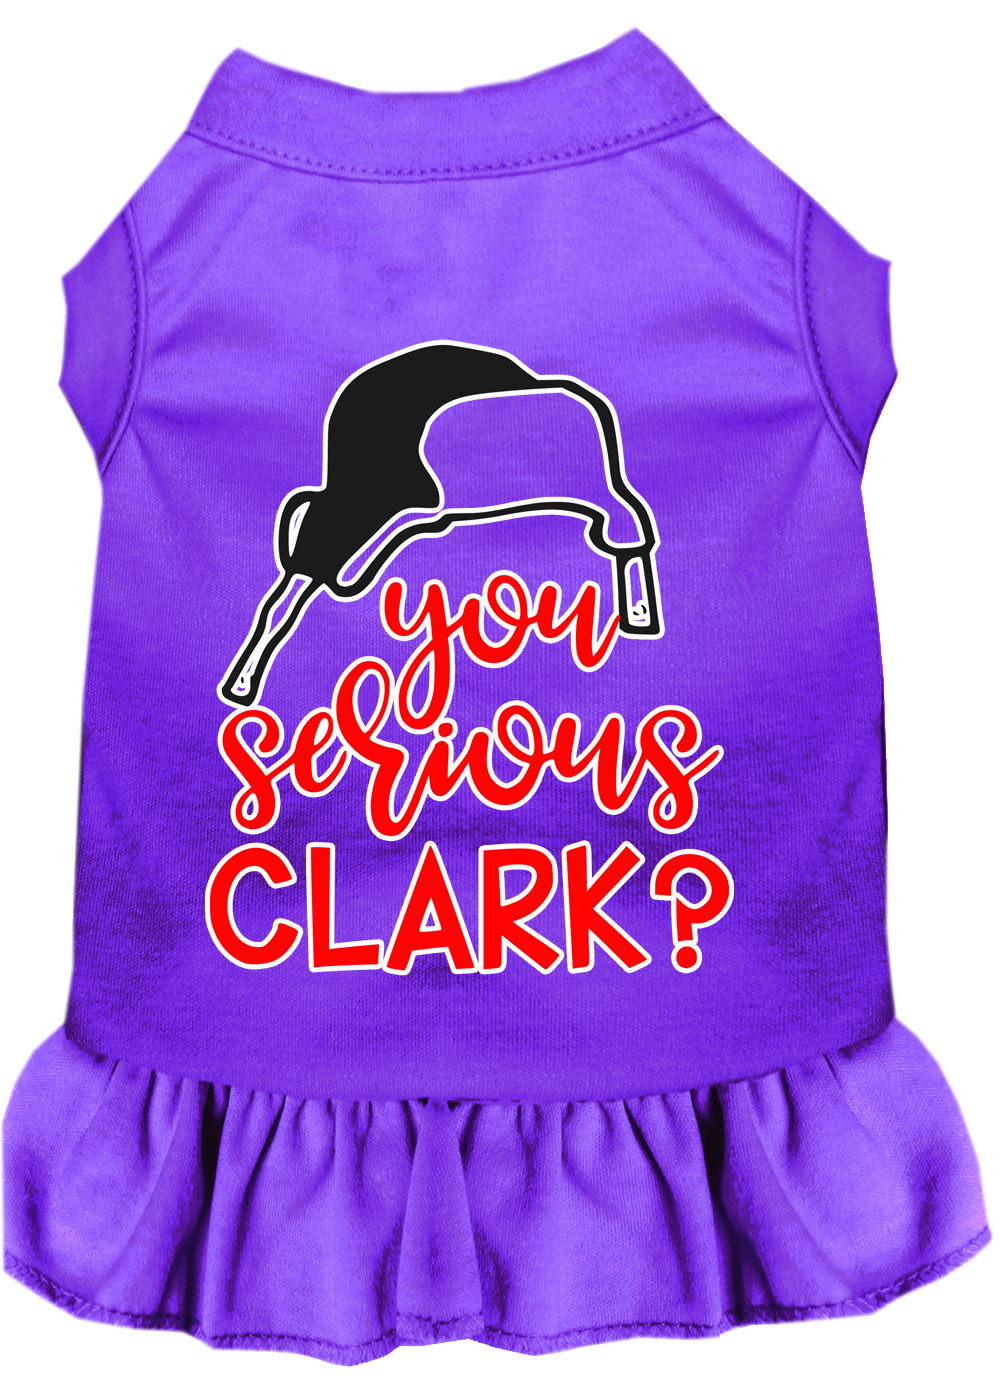 You Serious Clark? Screen Print Dog Dress Purple Sm